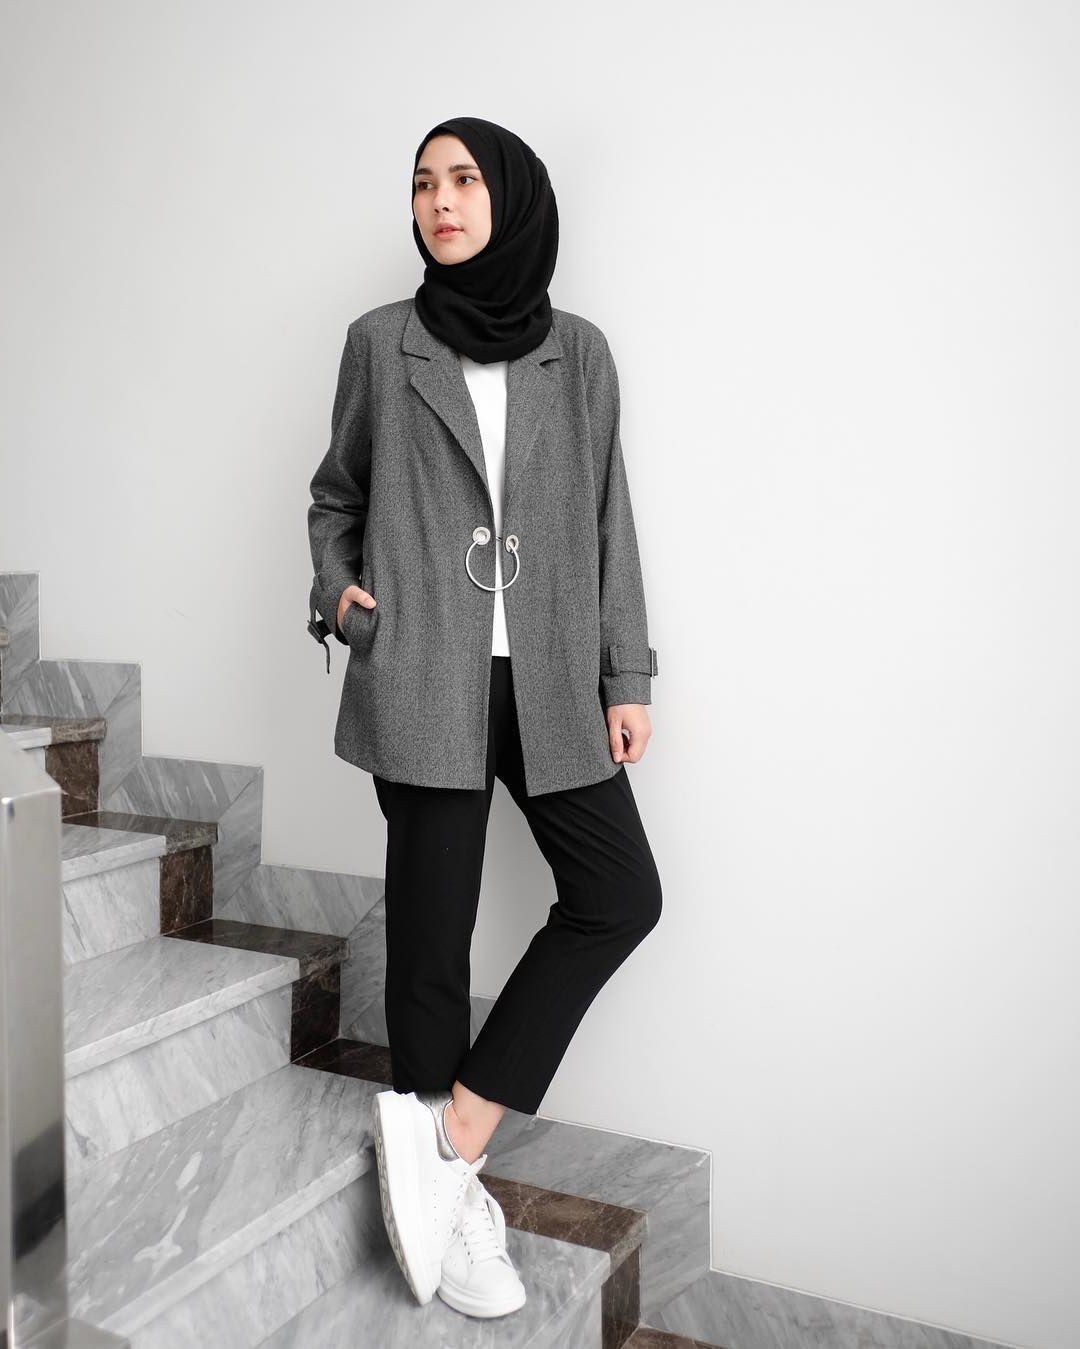 Model Fashion Muslimah Casual 0gdr 2 475 Likes 16 Ments Rani Hatta Ranihatta On